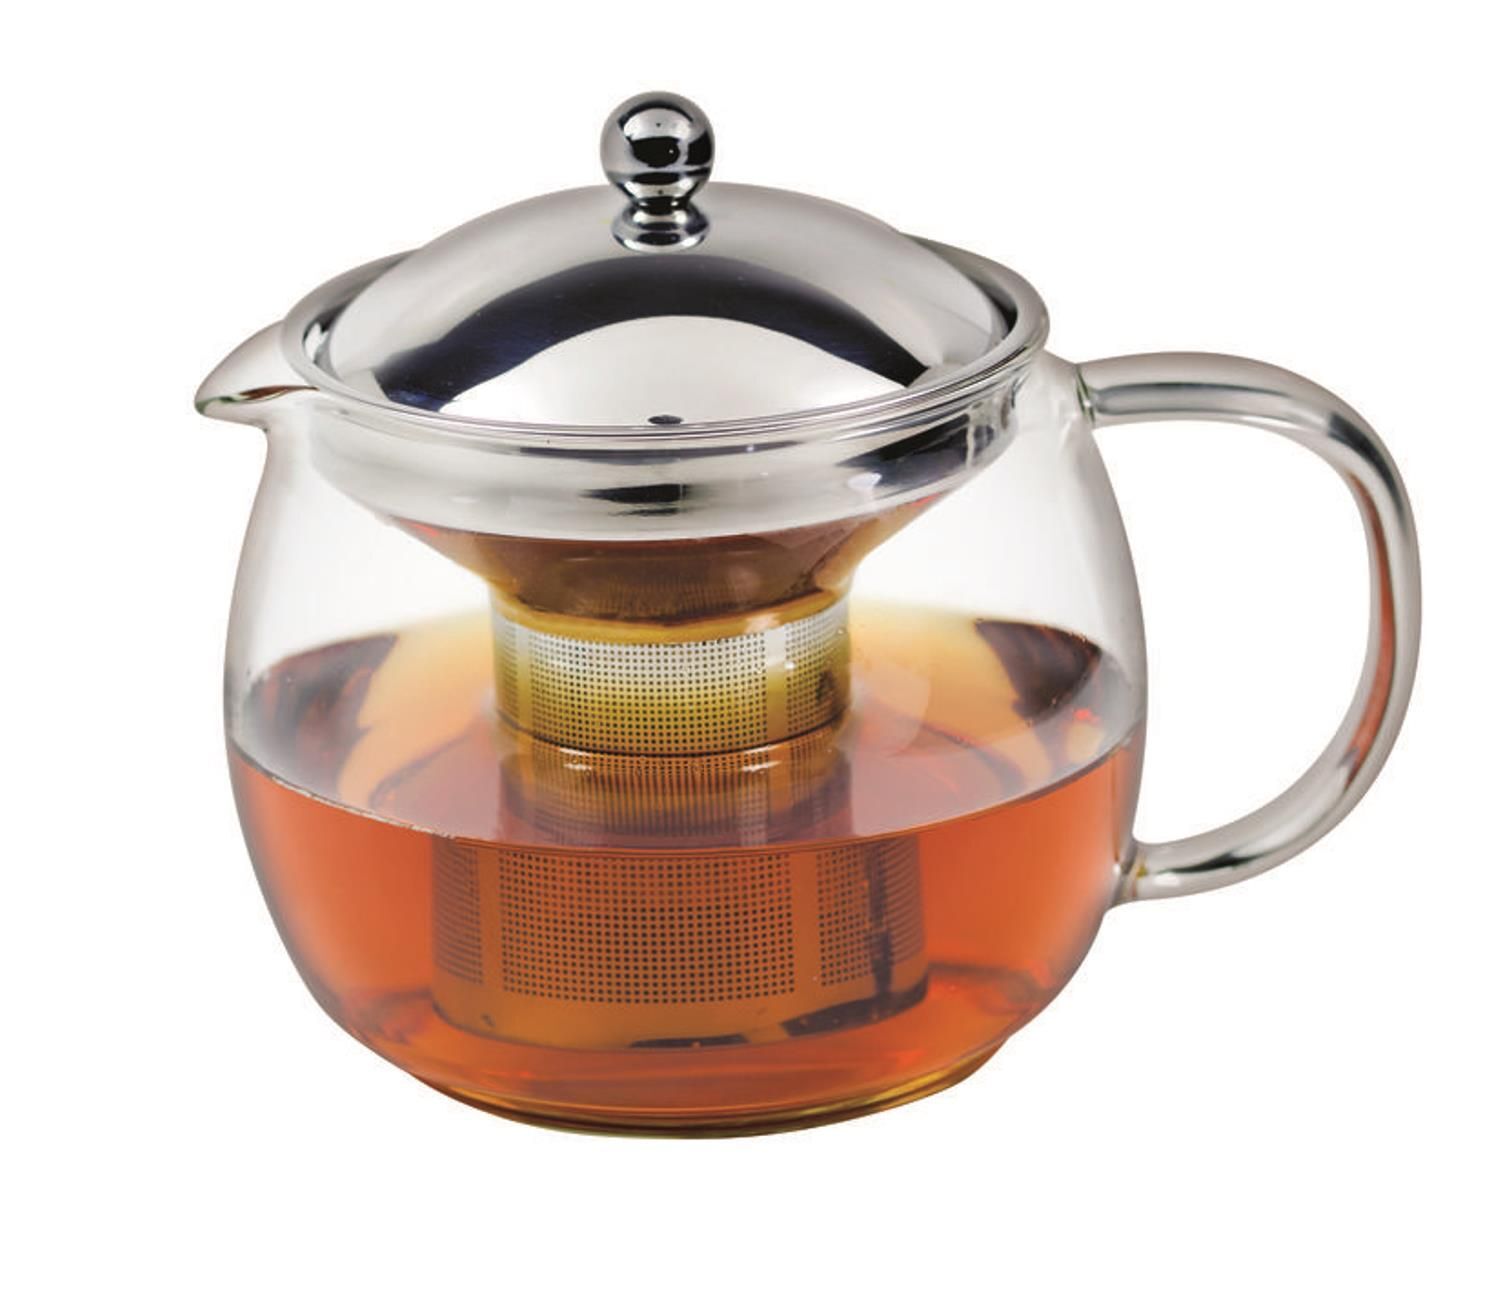 Avanti Ceylon Glass Teapot 1.25 Litres